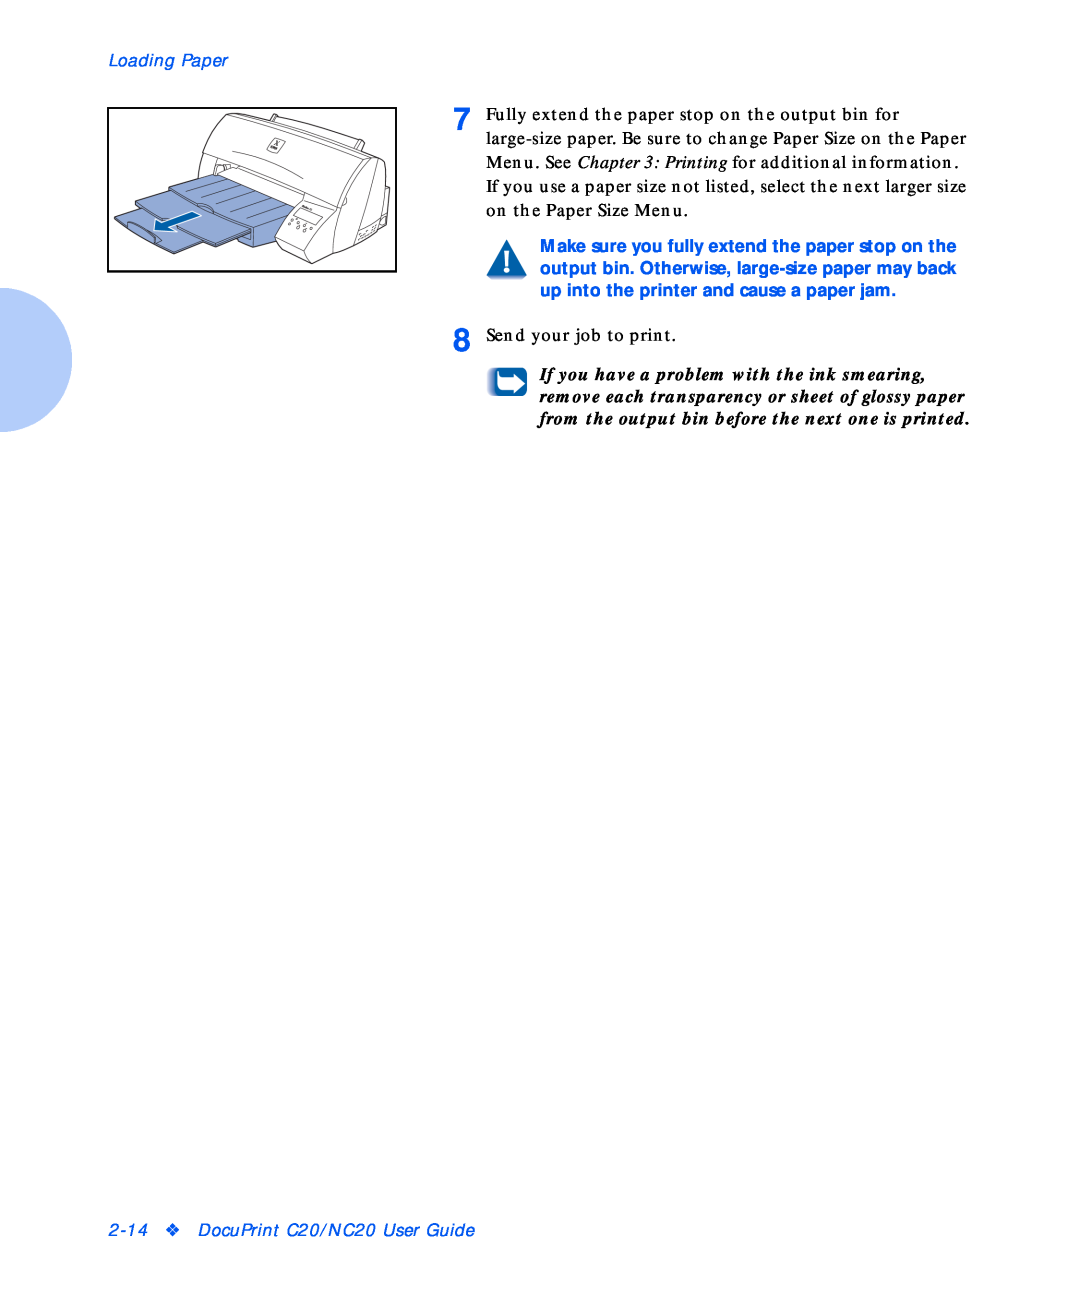 Xerox manual Loading Paper, DocuPrint C20/NC20 User Guide 